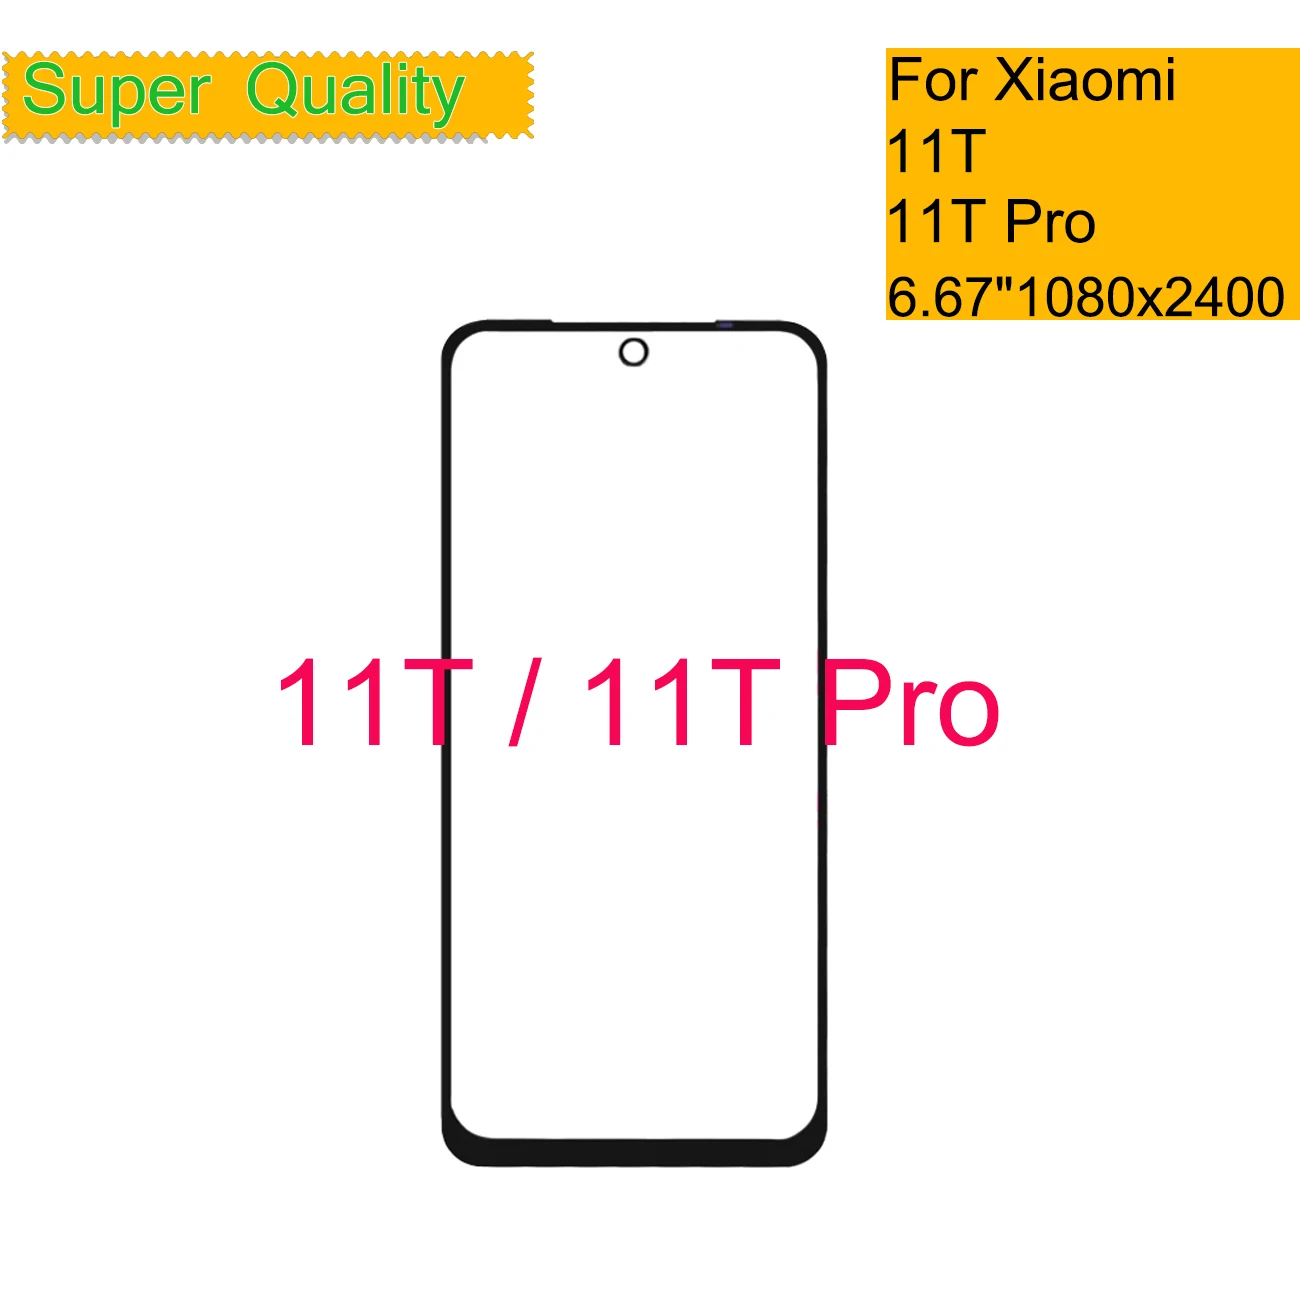 Xiaomi 11T Pro specs - PhoneArena